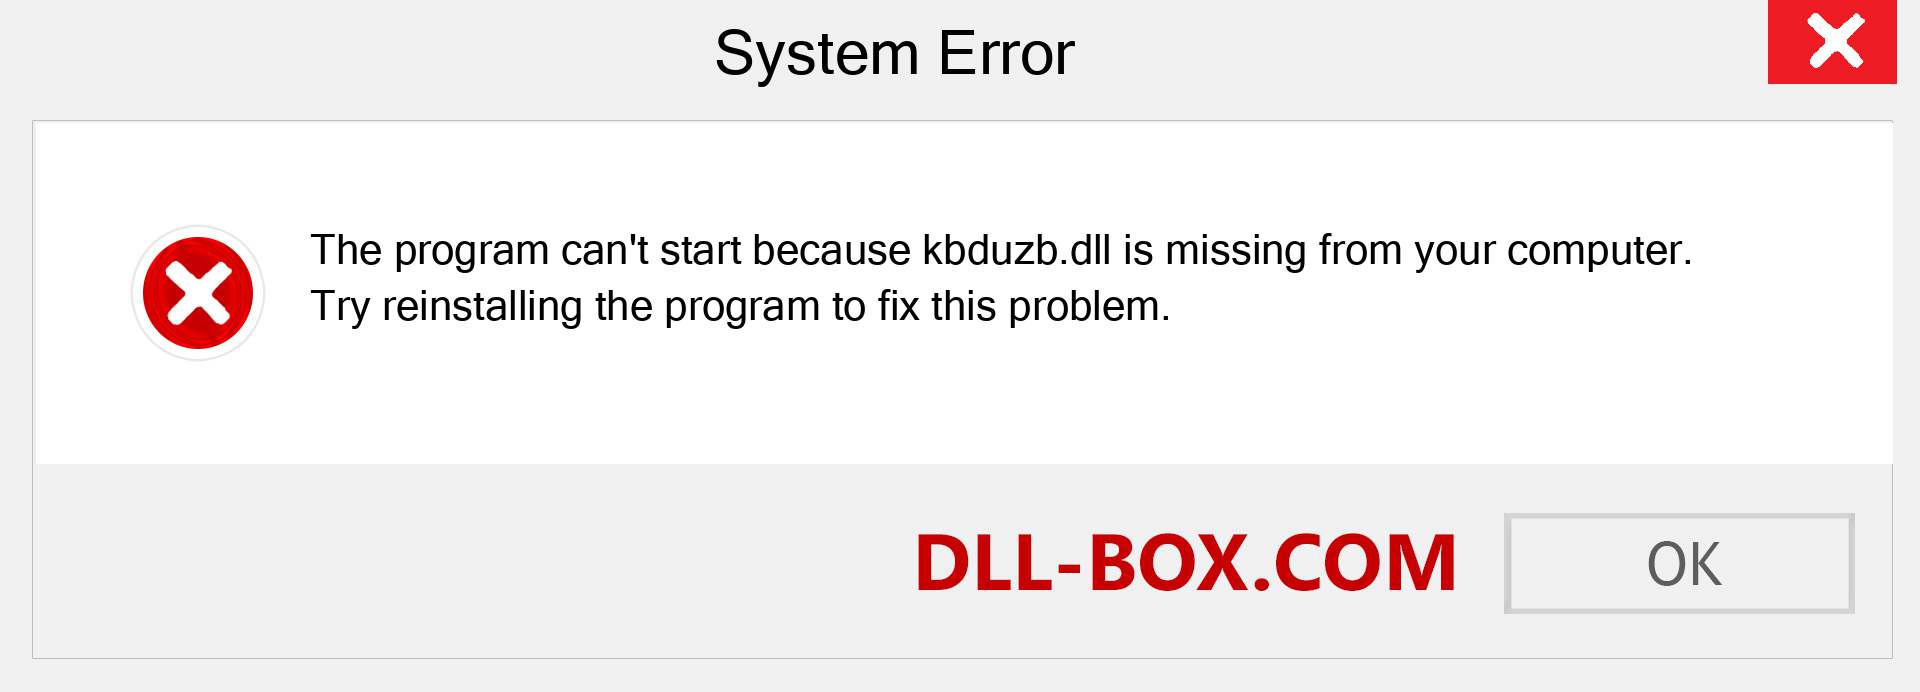  kbduzb.dll file is missing?. Download for Windows 7, 8, 10 - Fix  kbduzb dll Missing Error on Windows, photos, images